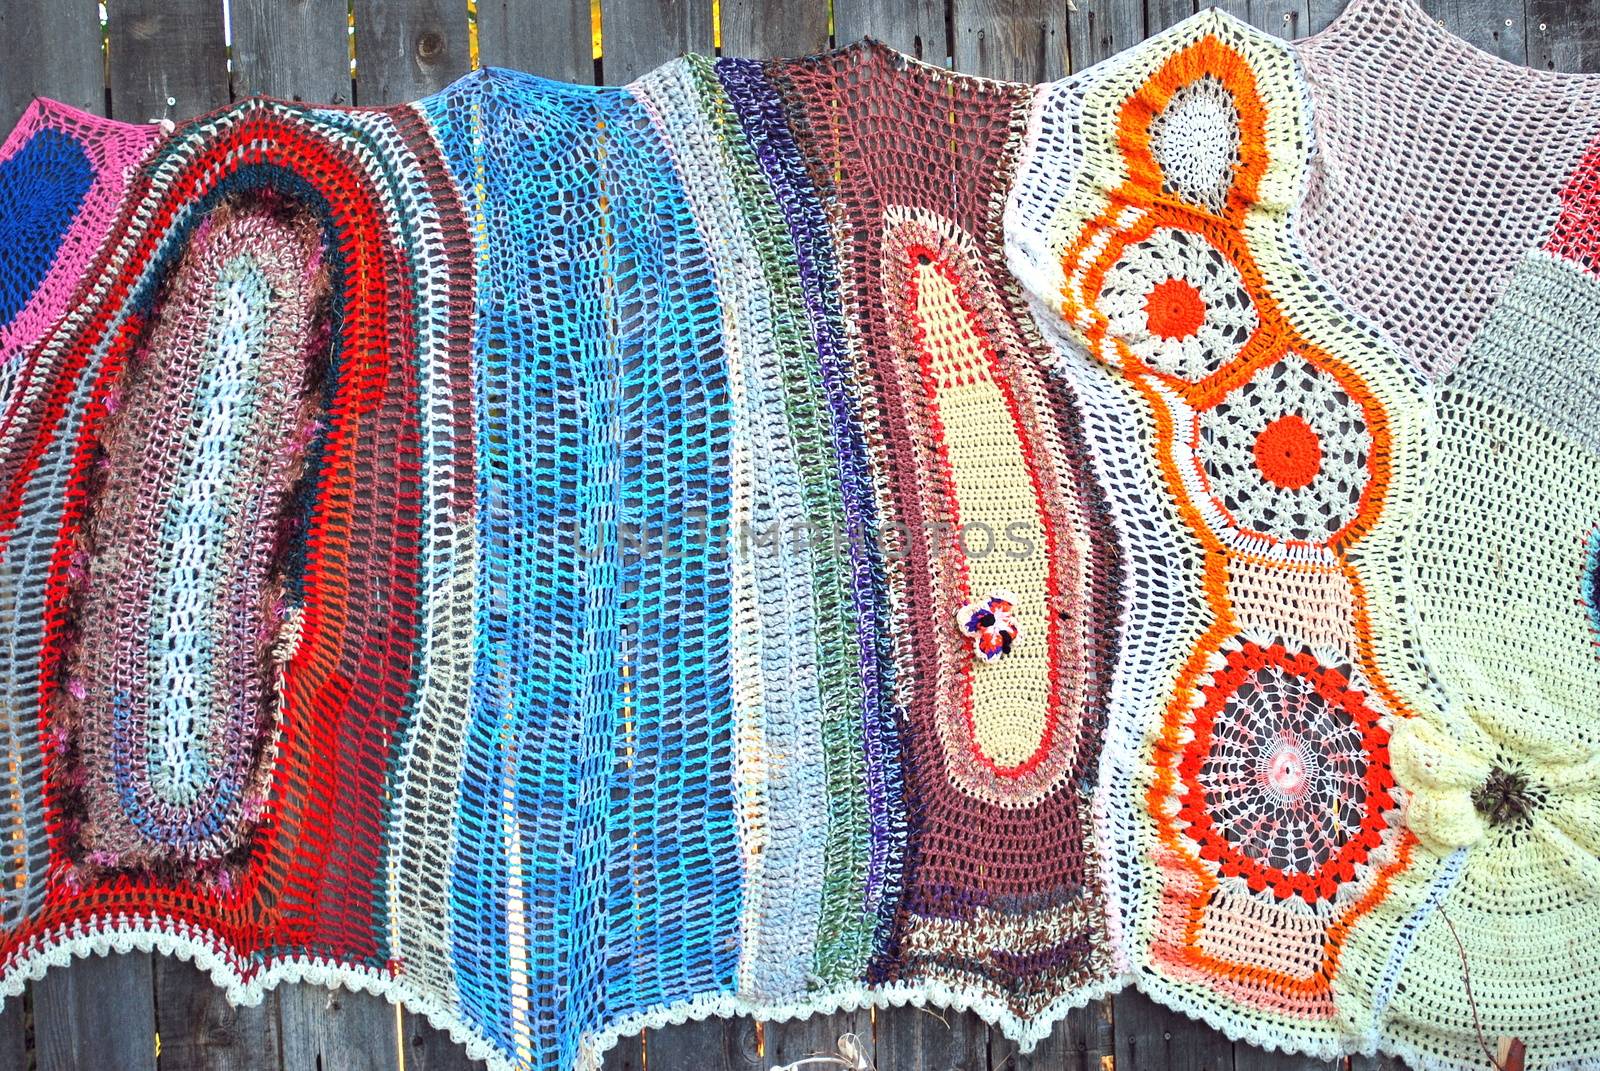 Crochet patterns. by oscarcwilliams